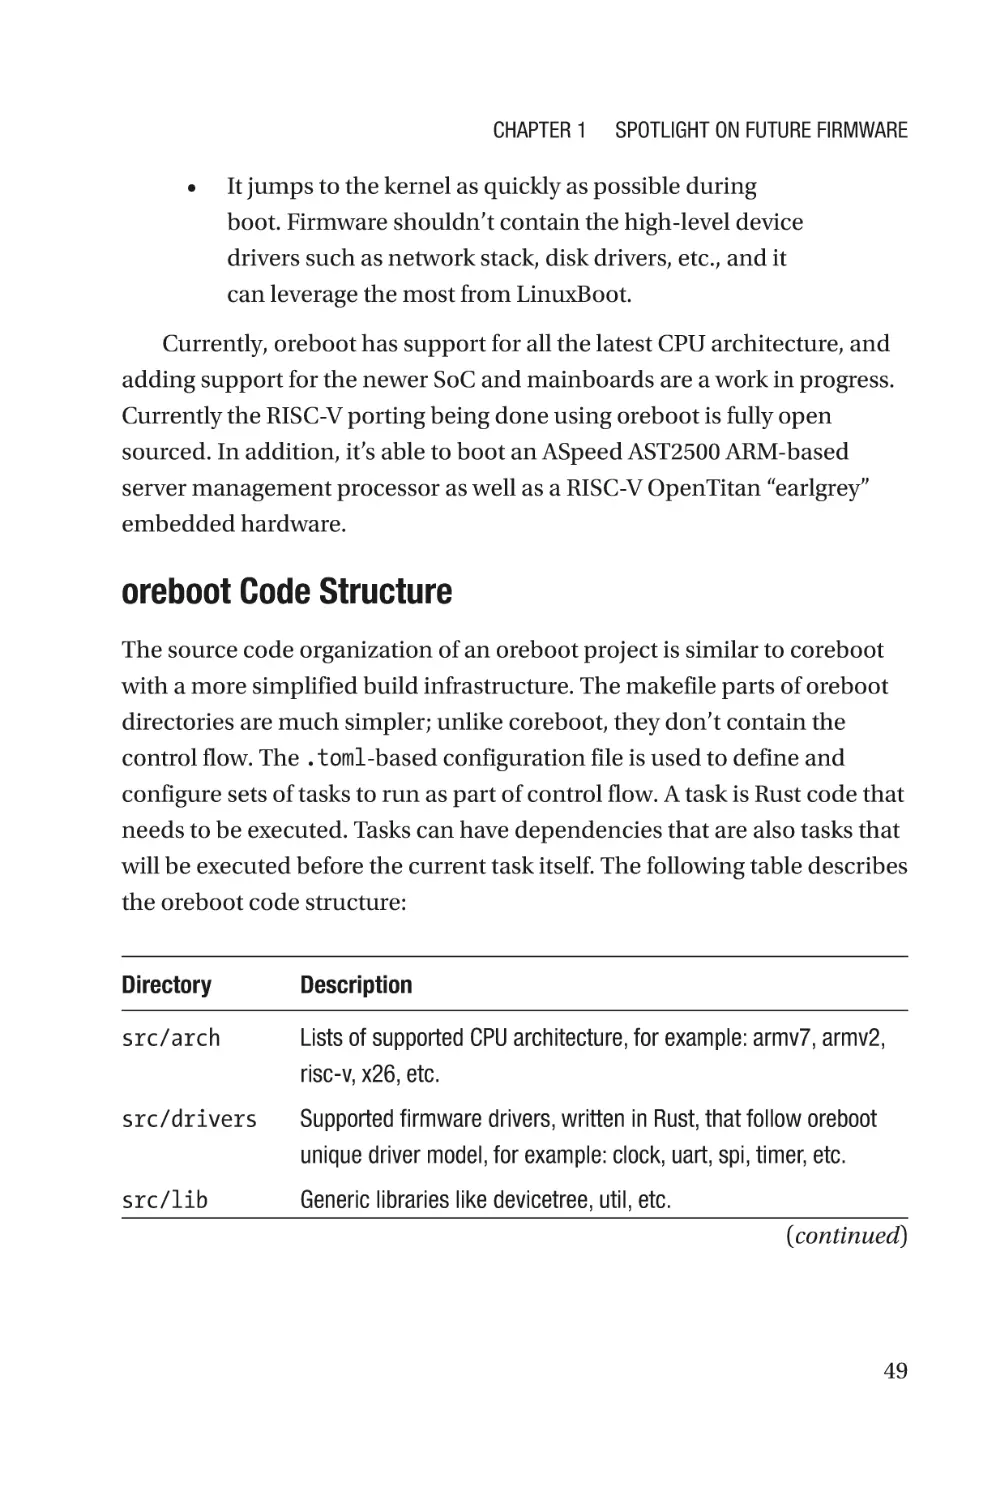 oreboot Code Structure